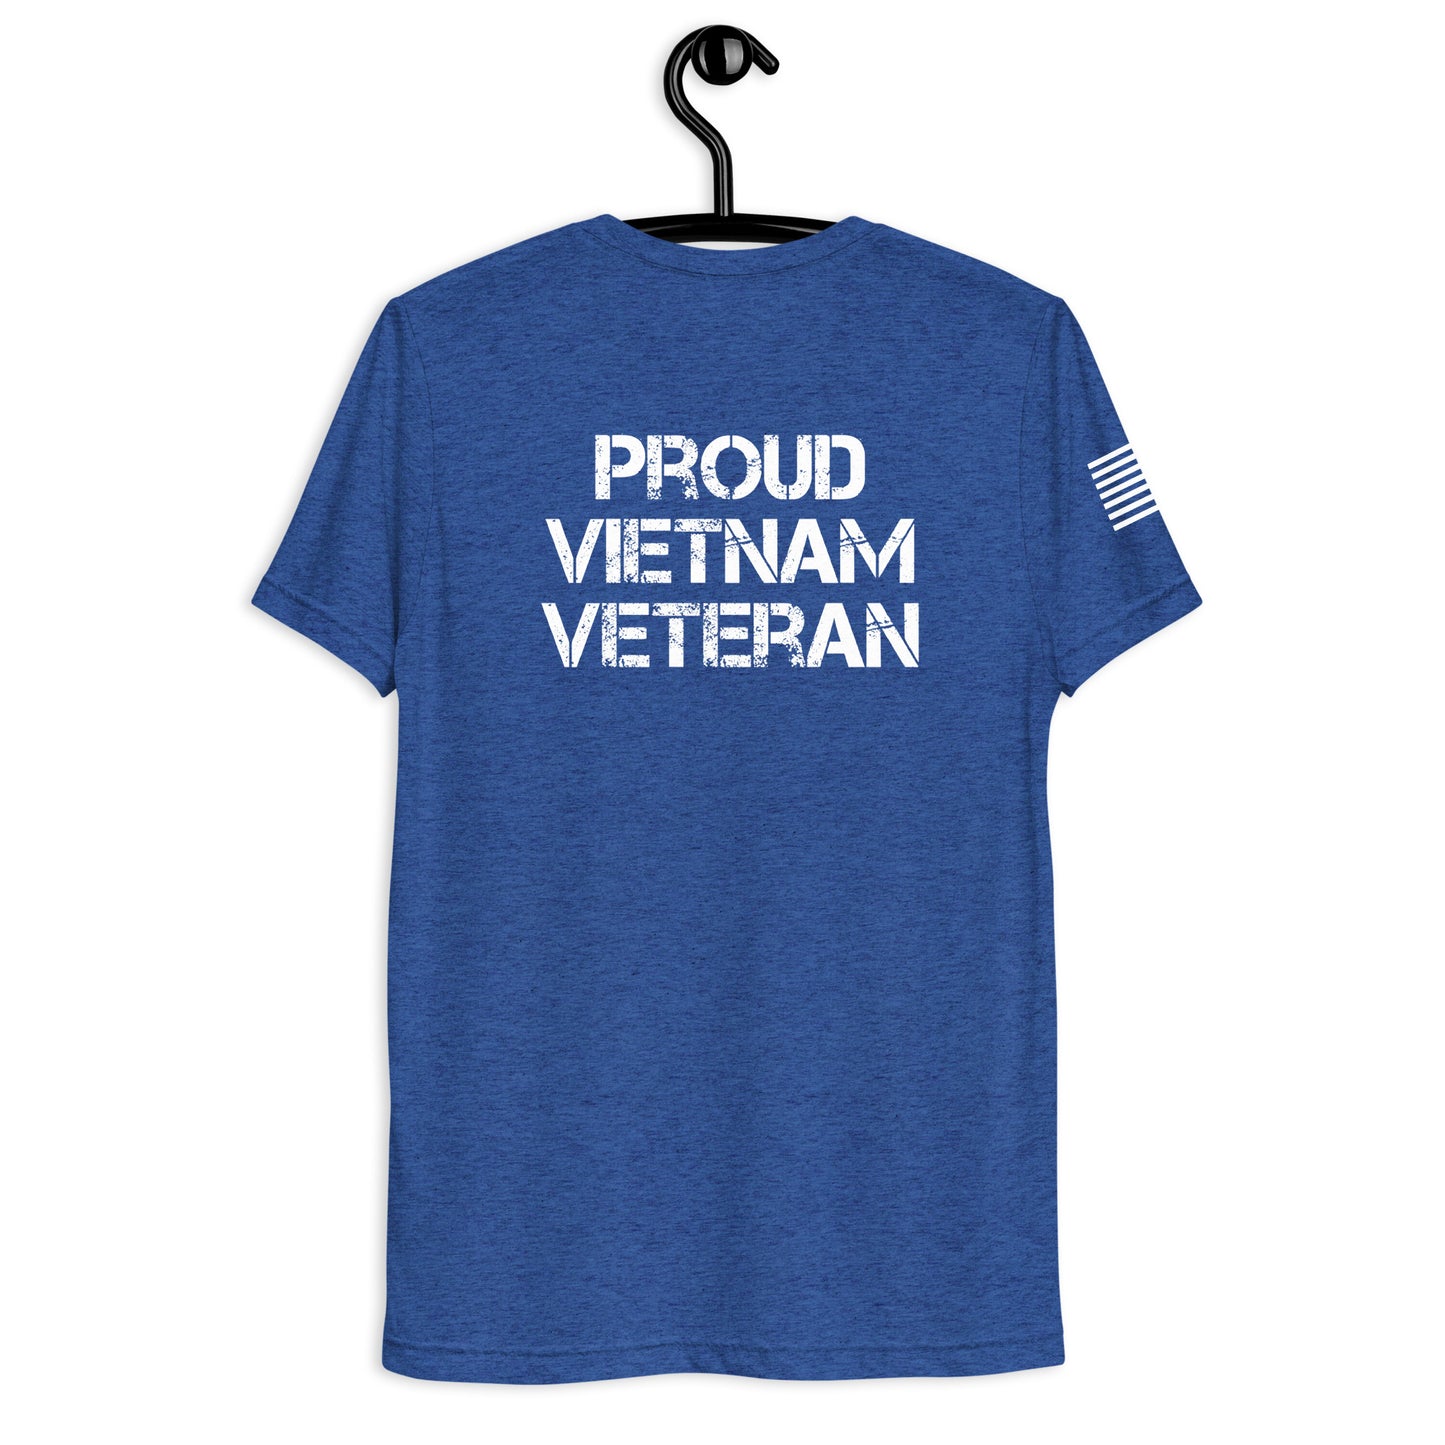 Proud Vietnam Veteran - Short sleeve t-shirt